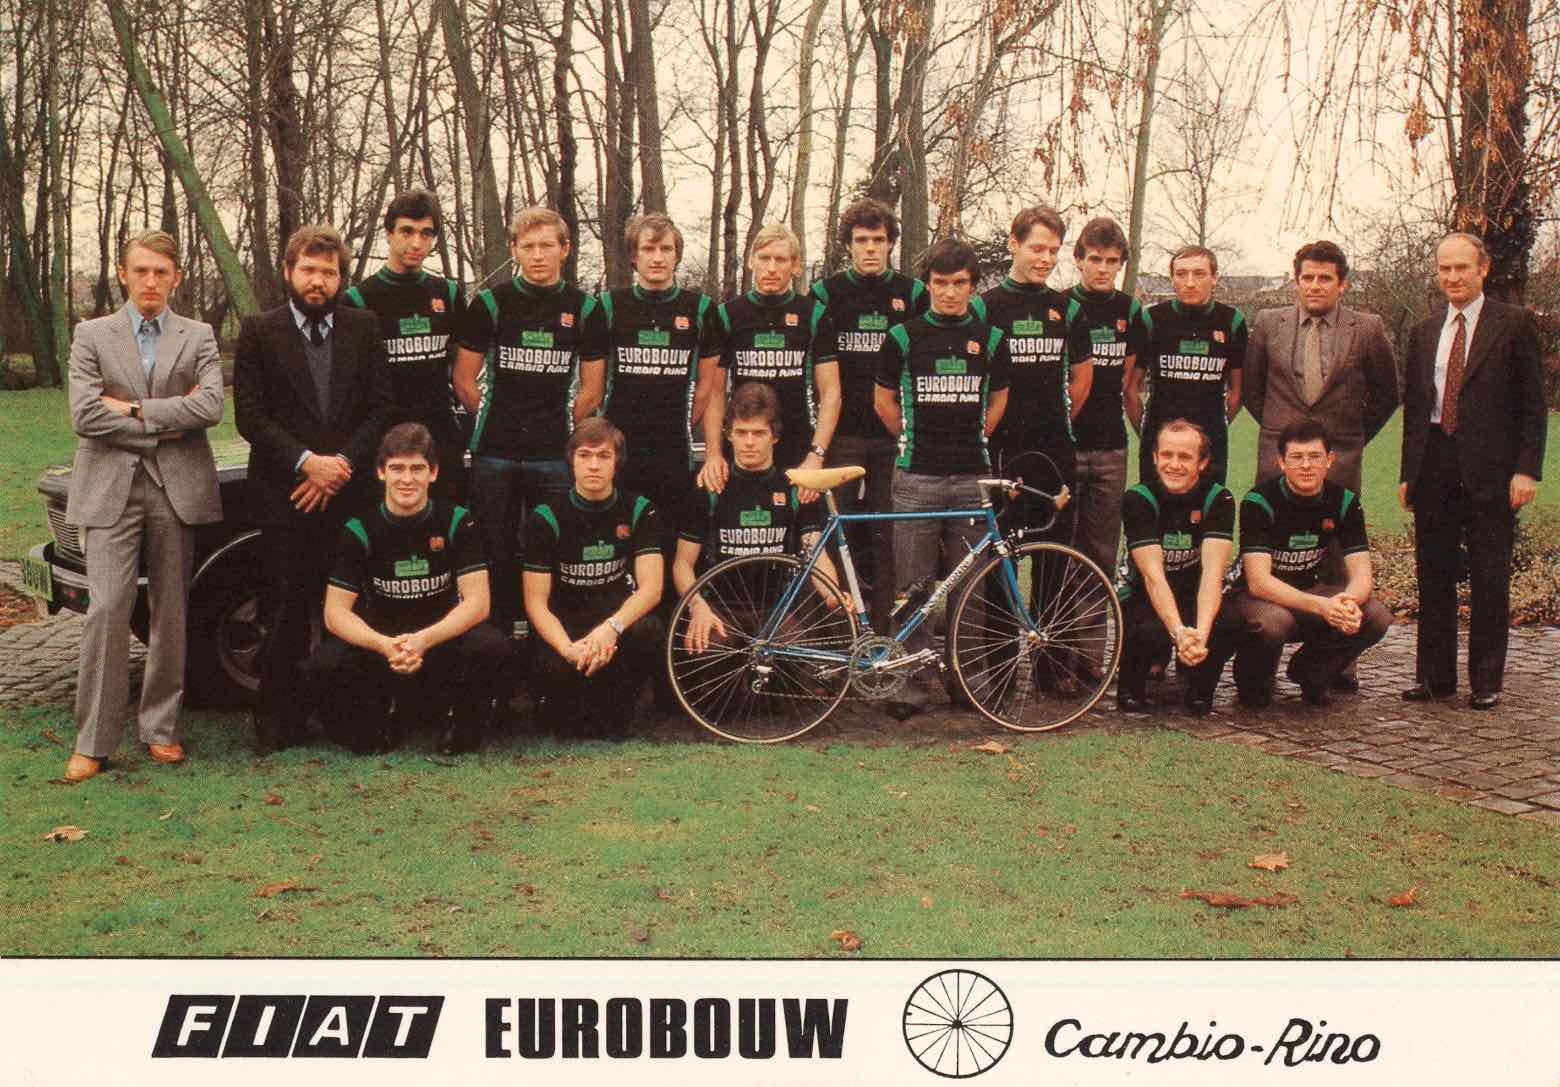 Rino postcard - 1980 FIAT-Eurobouw-Cambio Rino cycling team scan 1 main image